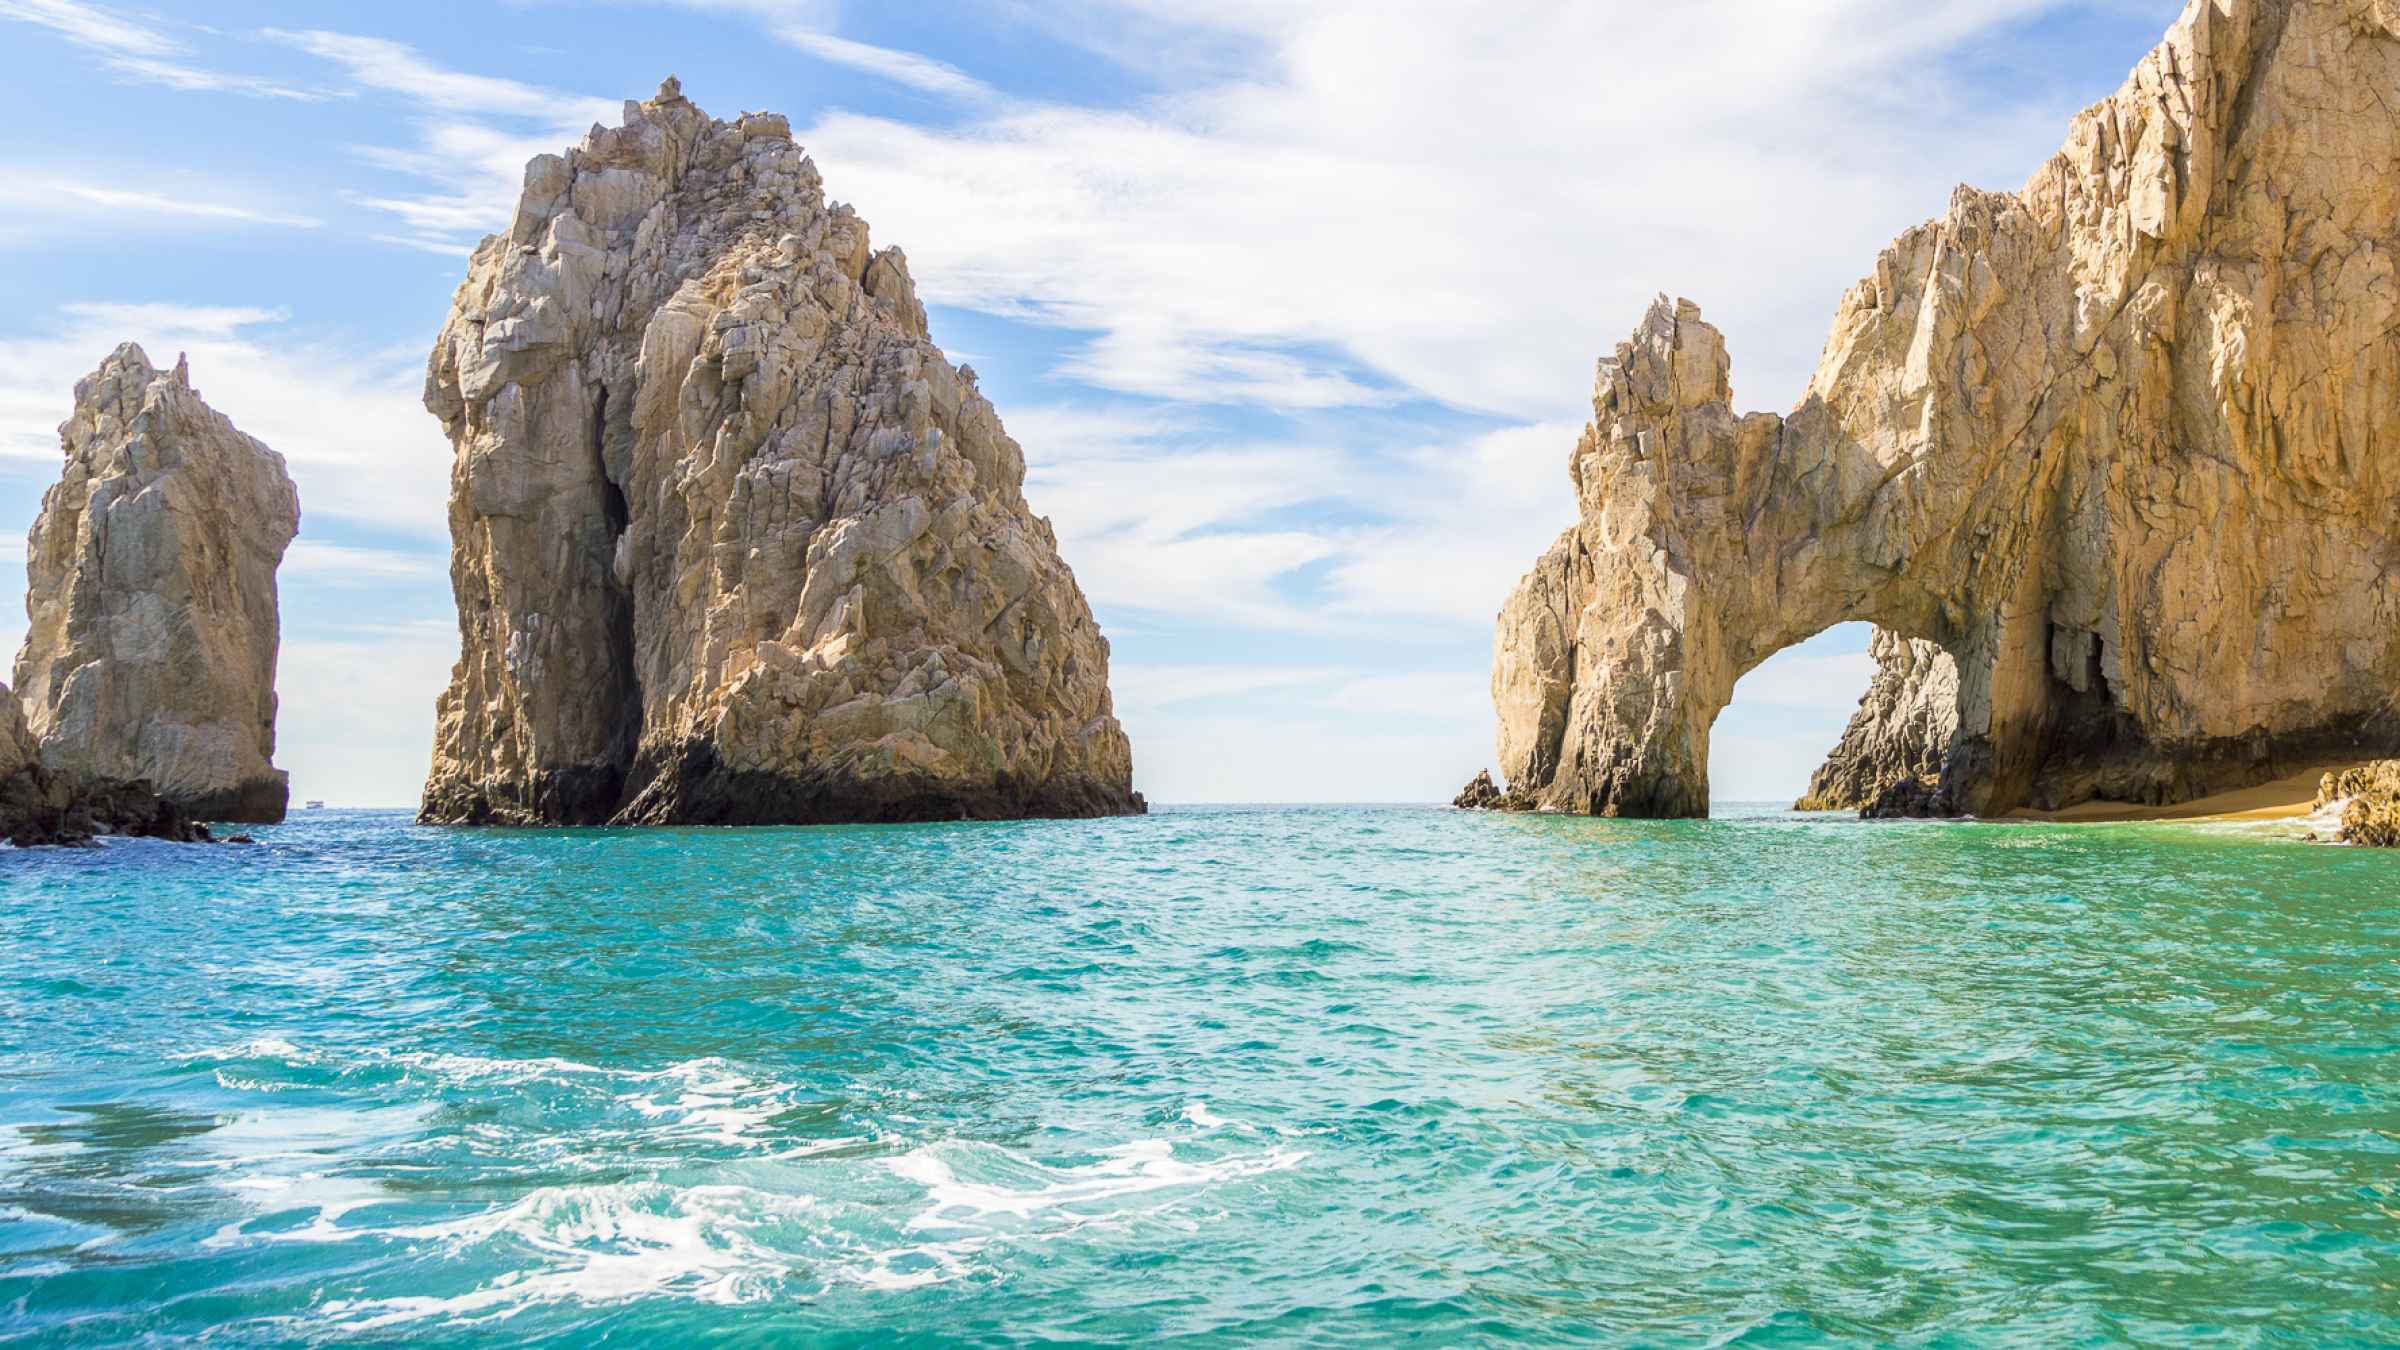 Cabo San Lucas luxury yacht charter destination in Baja California sur, Mexico